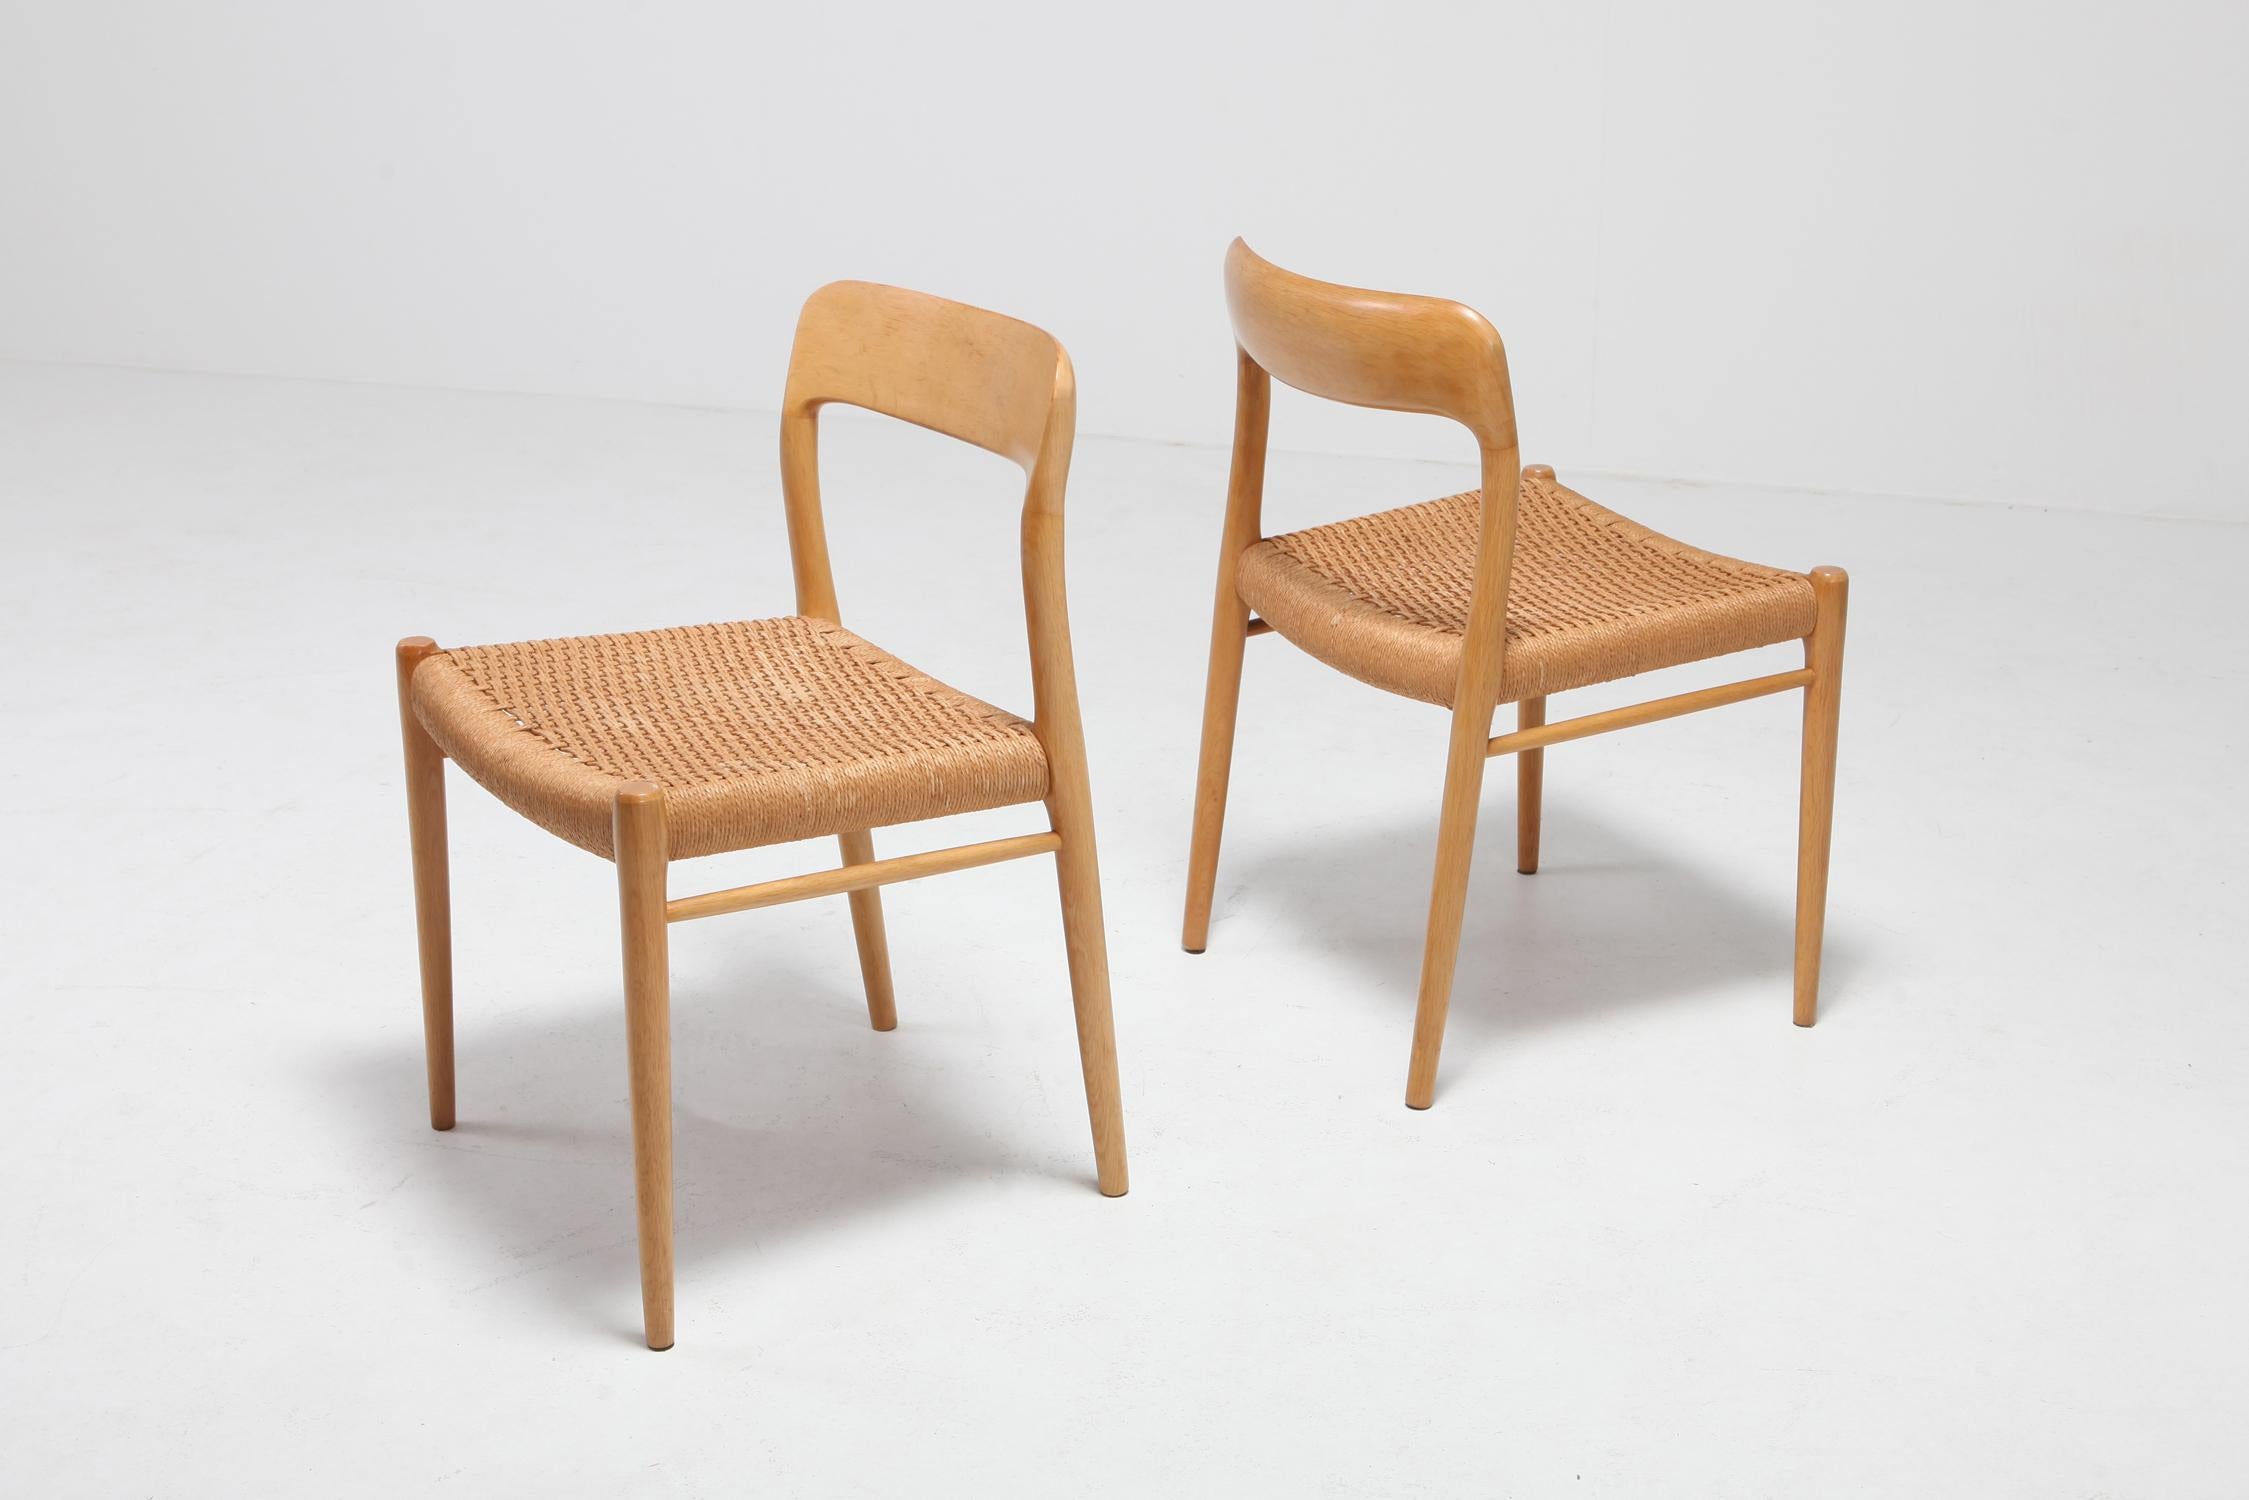 20th Century Scandinavian Modern Chairs in Oak by N.O. Möller for J.L. Moller